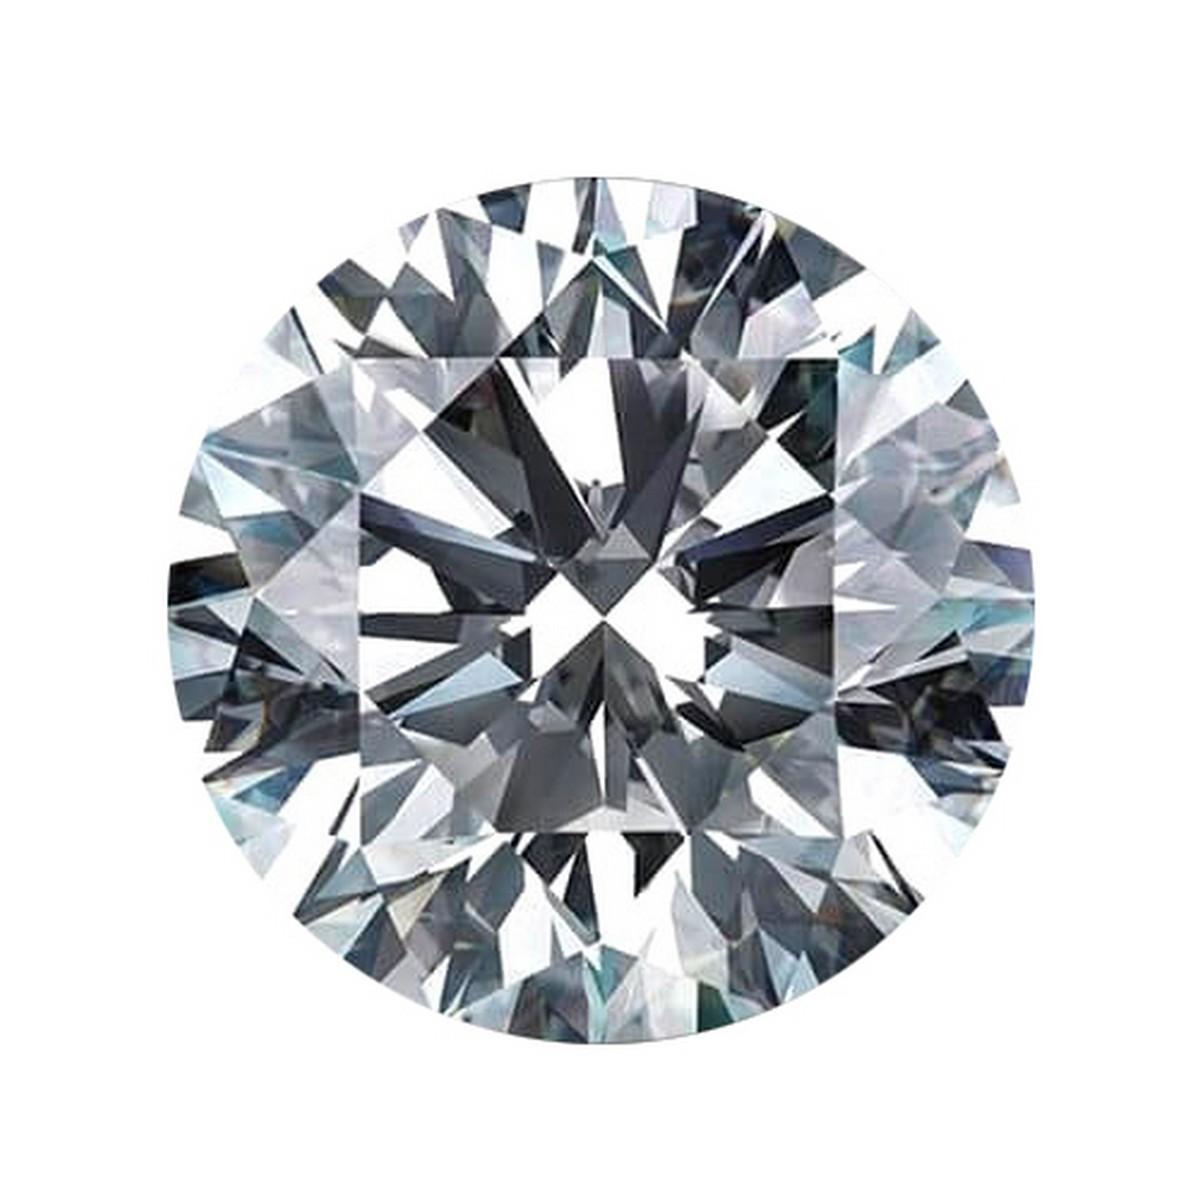 3.16 ctw. VVS2 IGI Certified Round Cut Loose Diamond (LAB GROWN)